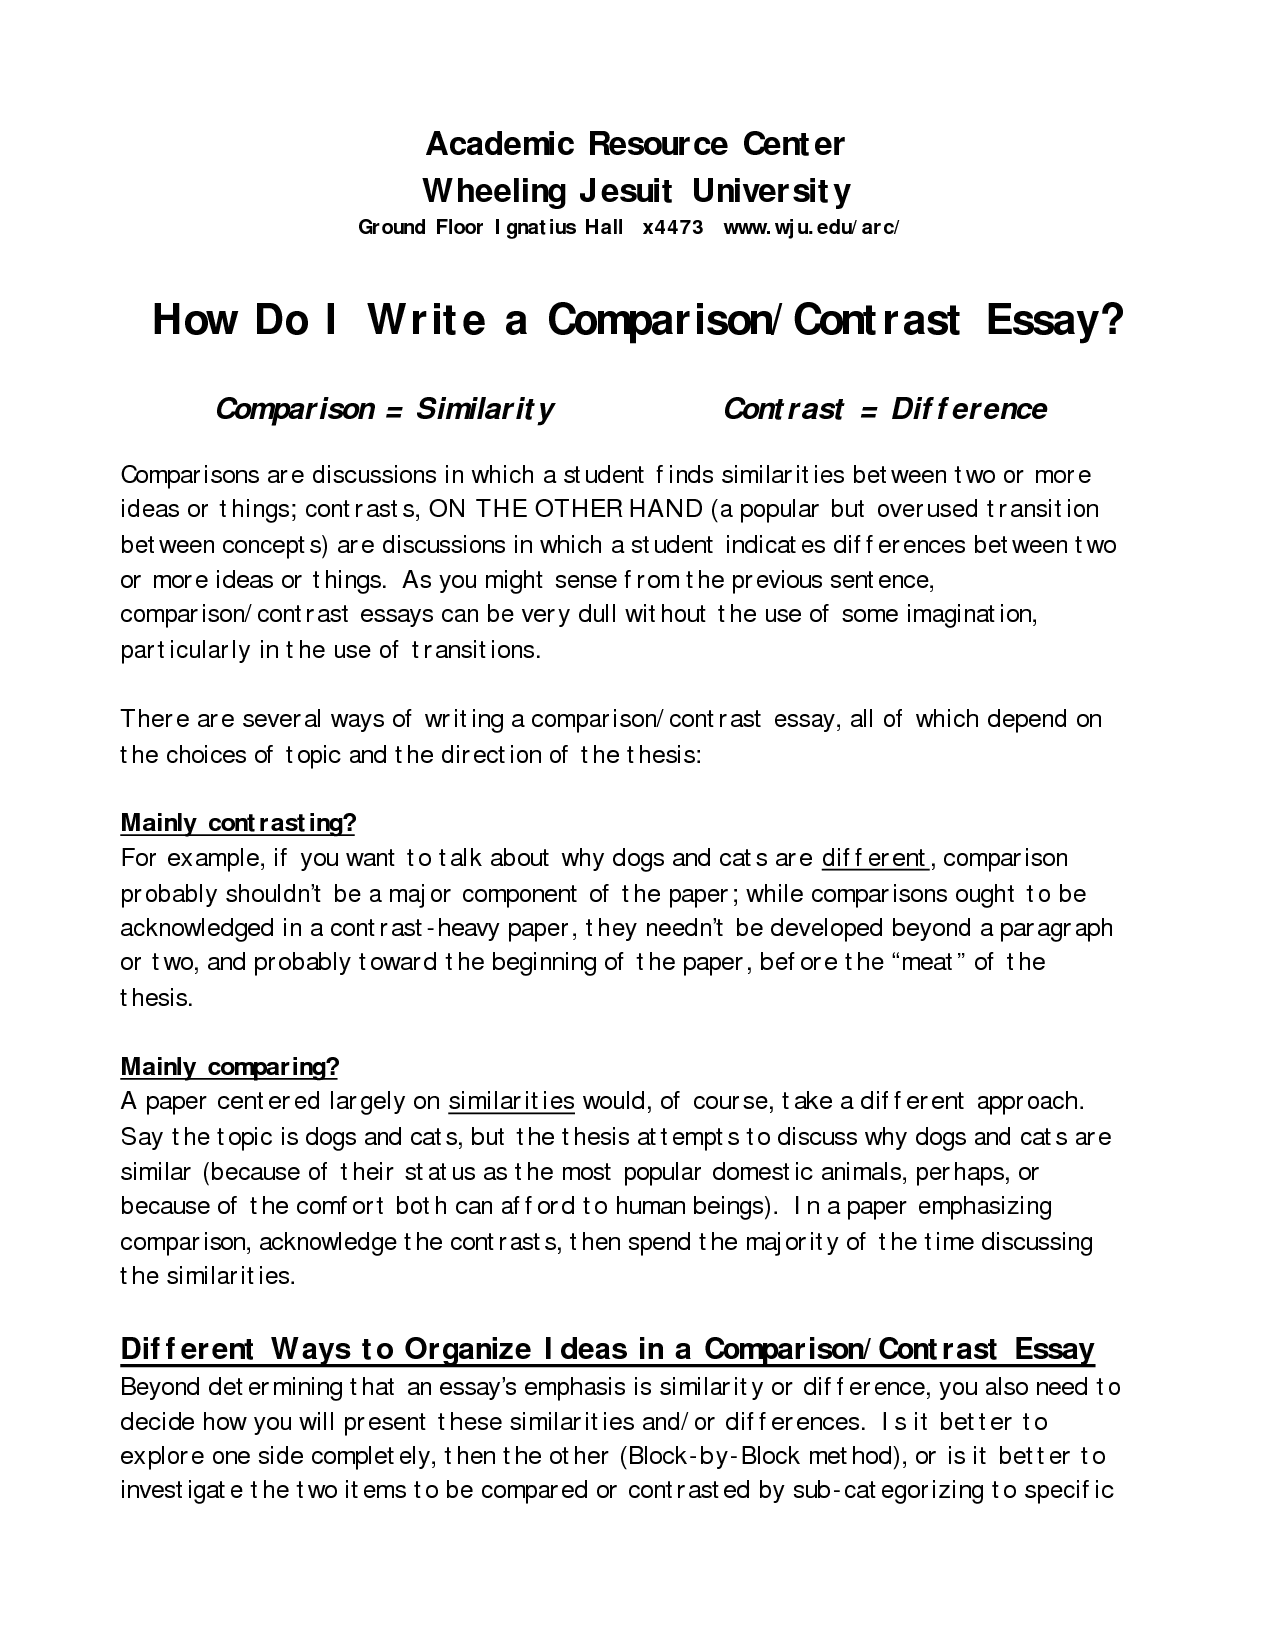 Compare and contrast essay high school vs college